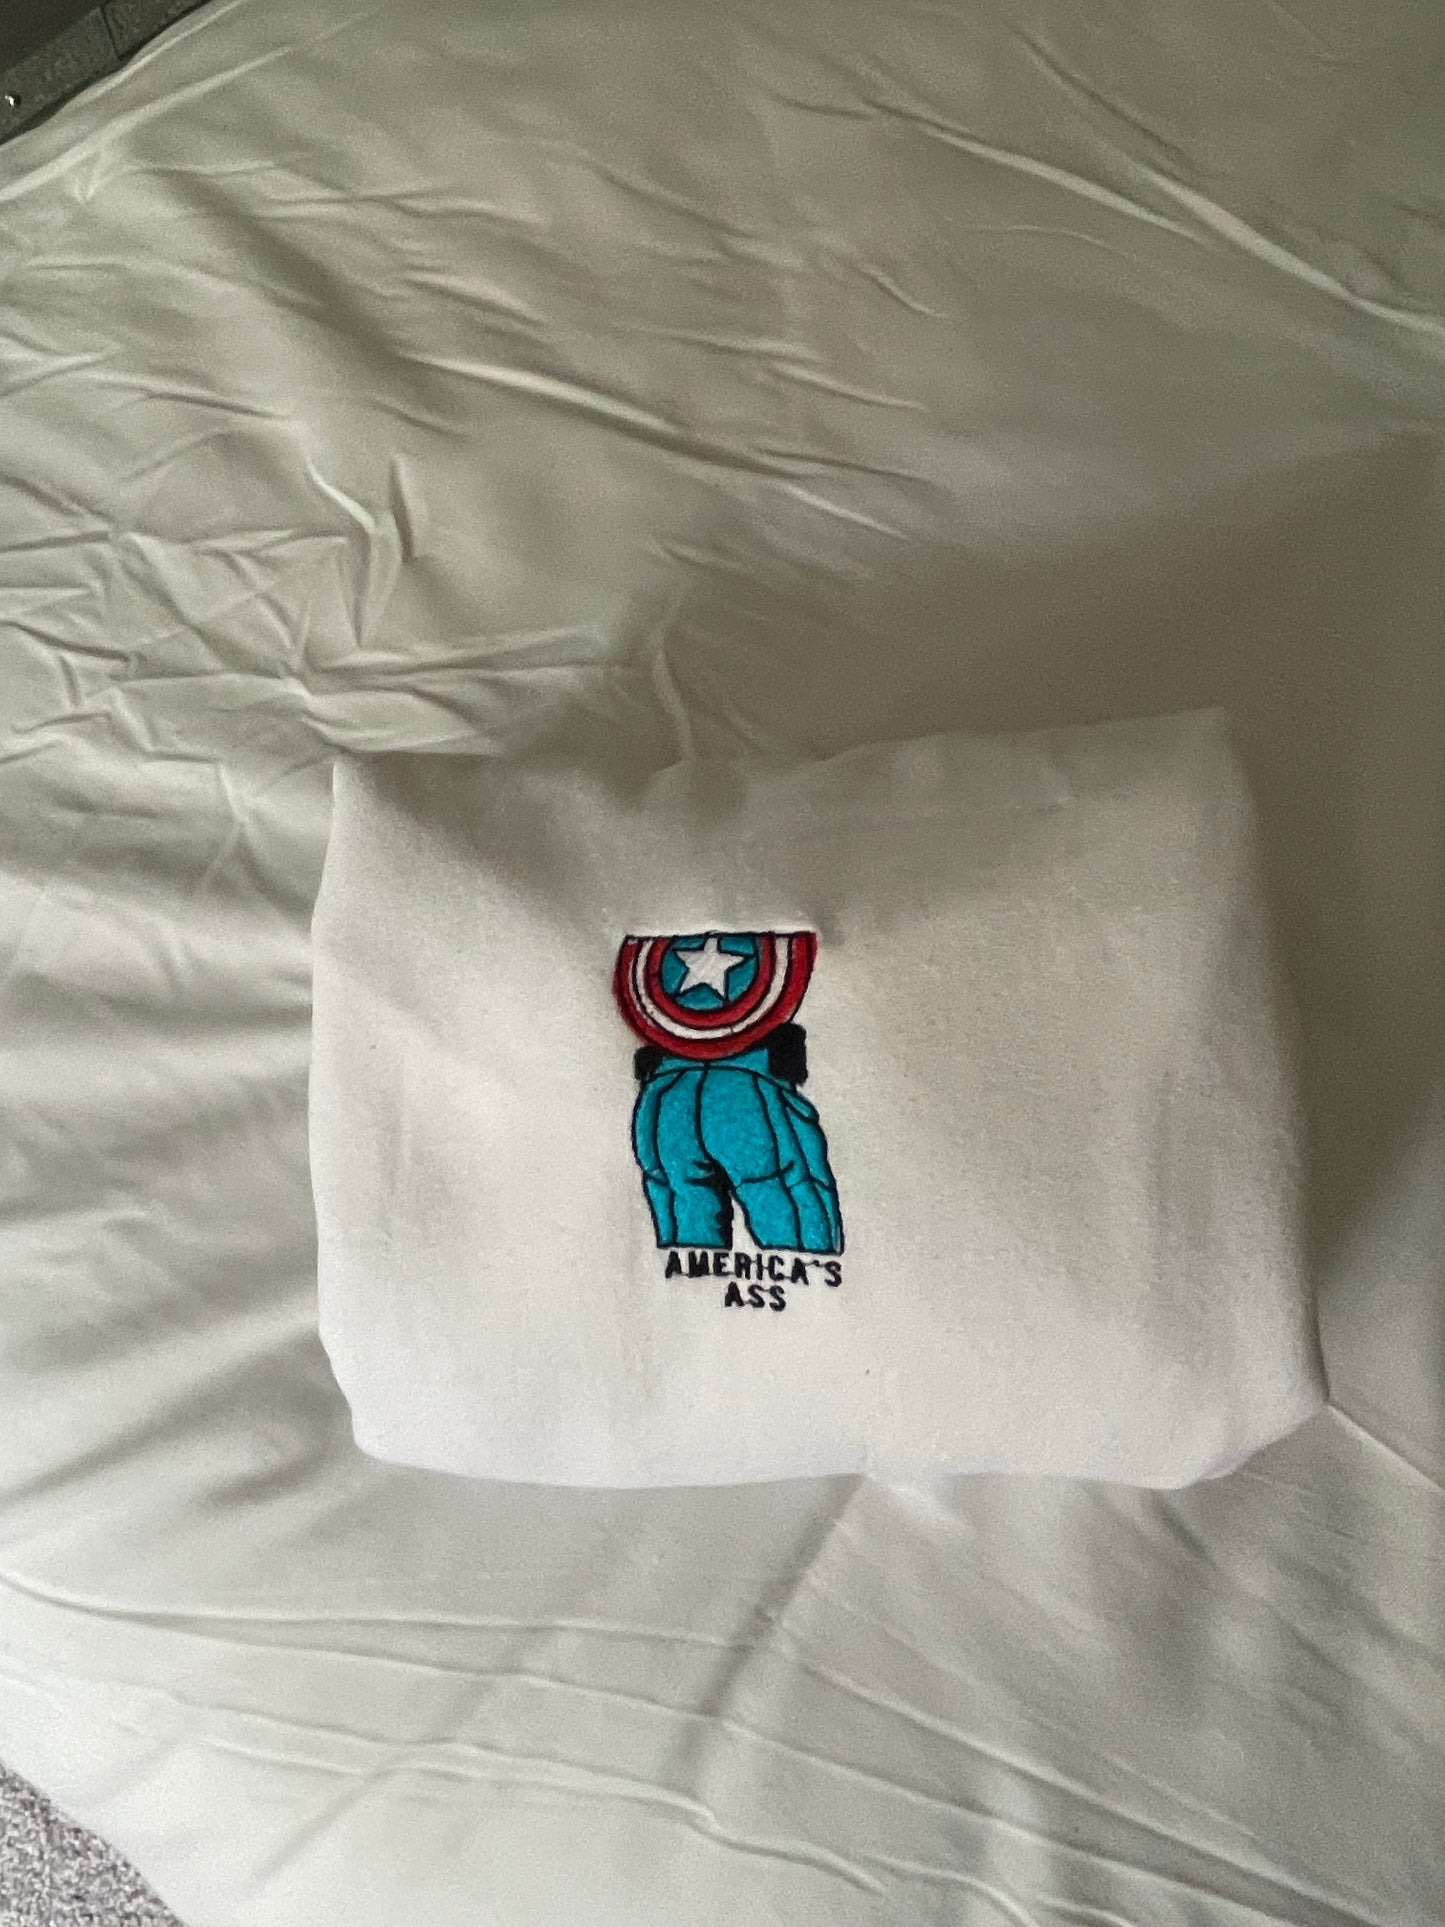 Captain America, Americas Ass embroidered sweatshirt